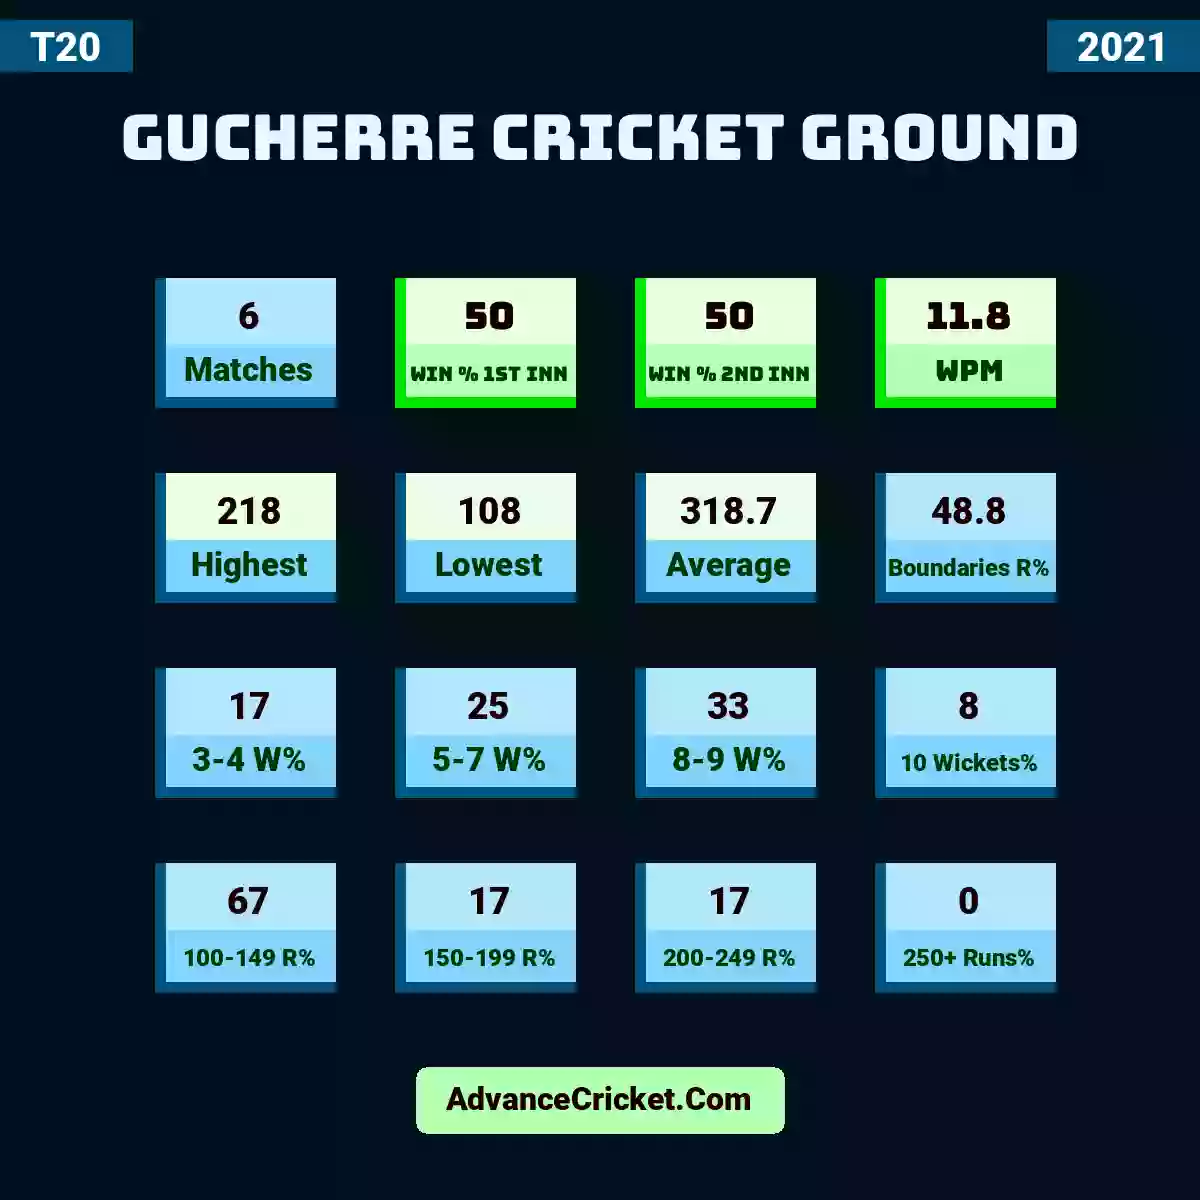 Image showing Gucherre Cricket Ground with Matches: 6, Win % 1st Inn: 50, Win % 2nd Inn: 50, WPM: 11.8, Highest: 218, Lowest: 108, Average: 318.7, Boundaries R%: 48.8, 3-4 W%: 17, 5-7 W%: 25, 8-9 W%: 33, 10 Wickets%: 8, 100-149 R%: 67, 150-199 R%: 17, 200-249 R%: 17, 250+ Runs%: 0.